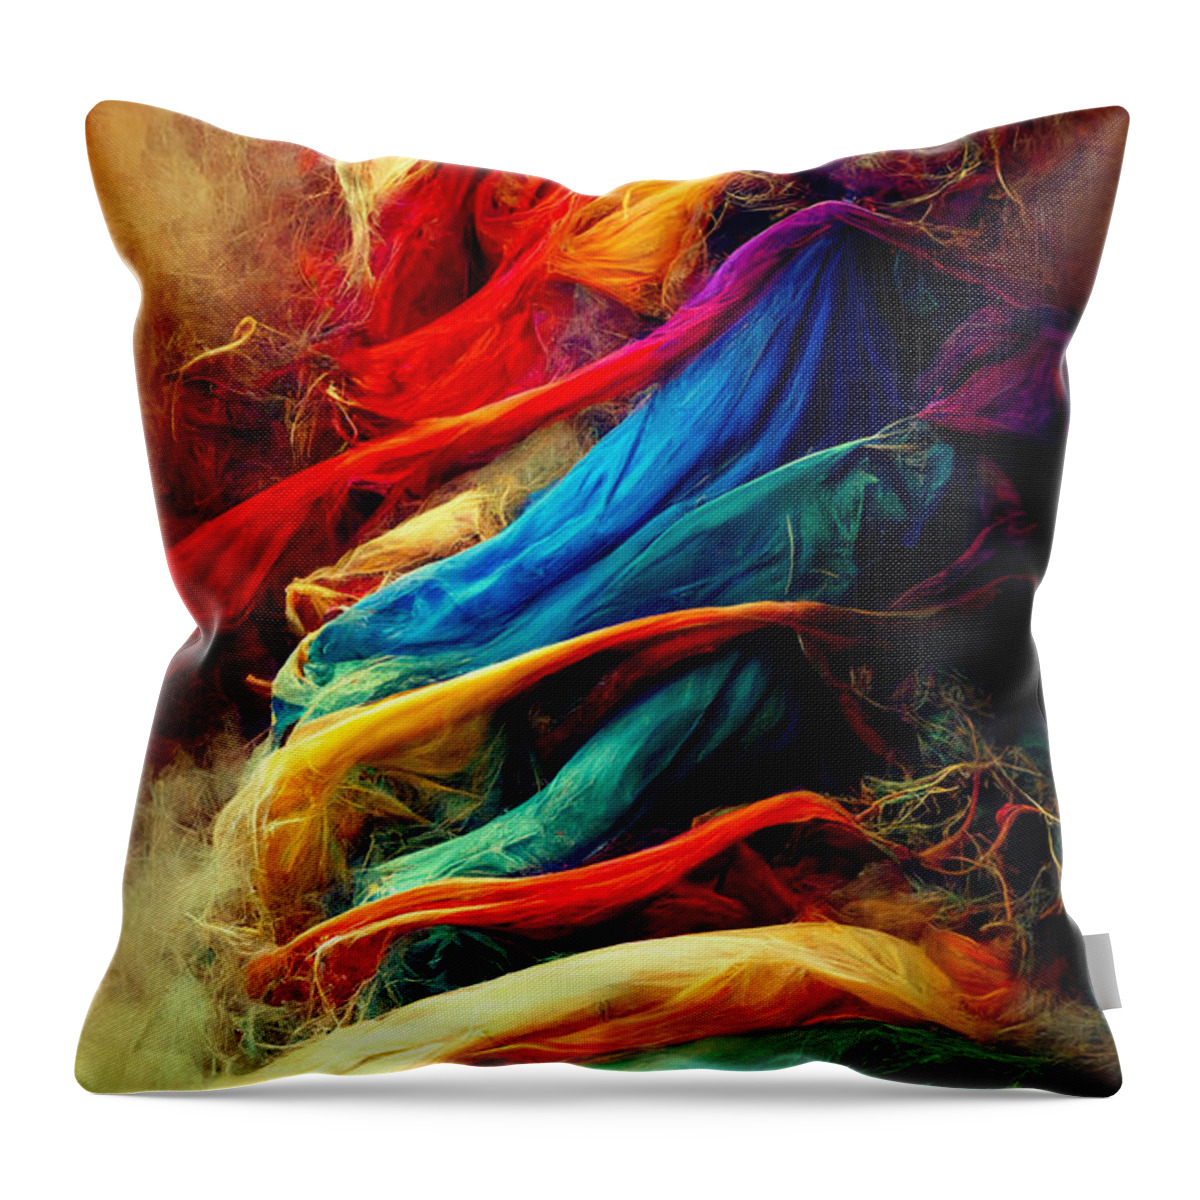 Tornado Throw Pillow featuring the digital art Tornado of colors #2 by Sabantha